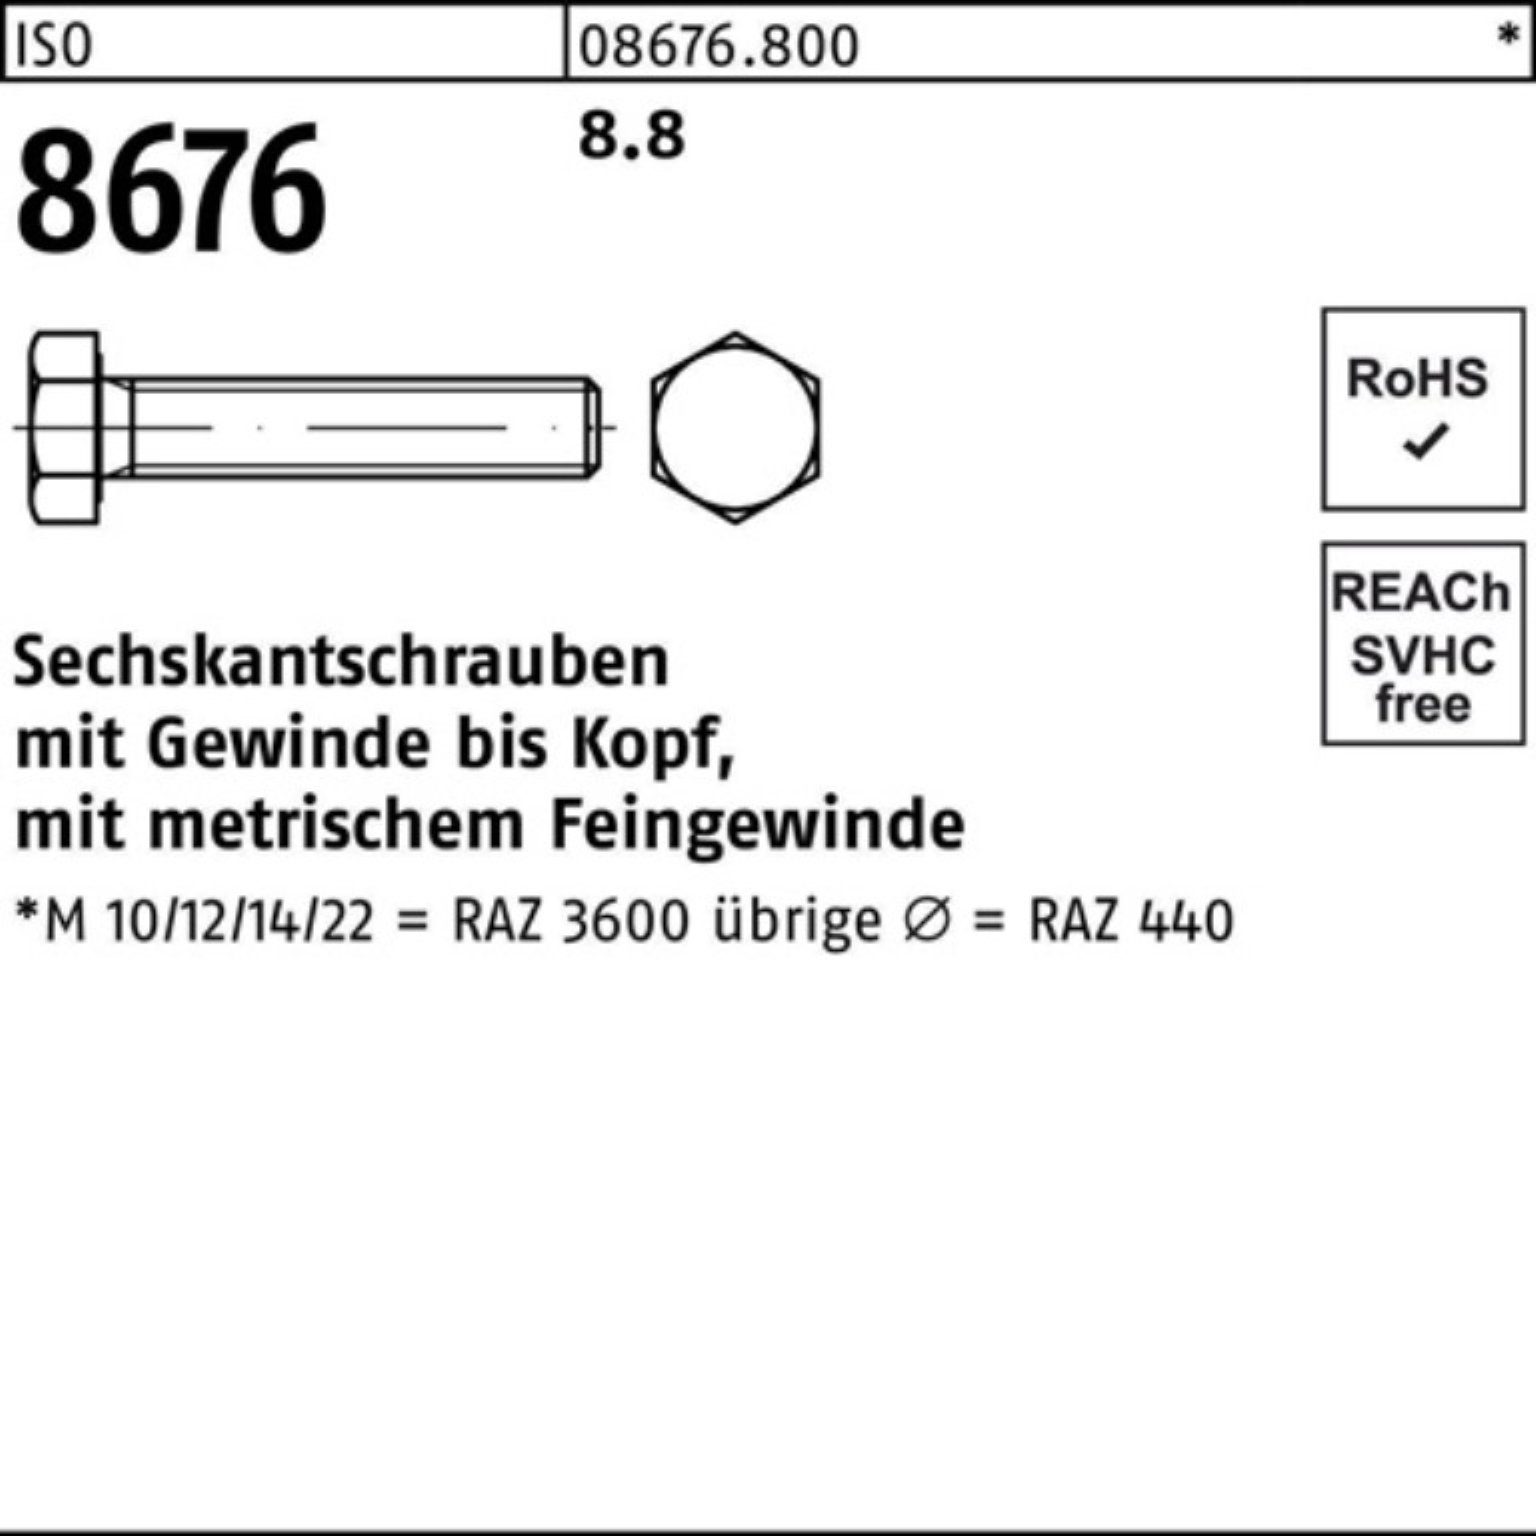 Reyher Sechskantschraube 100er Pack Stück 50 VG 8.8 M12x1,5x120 8676 ISO ISO Sechskantschraube